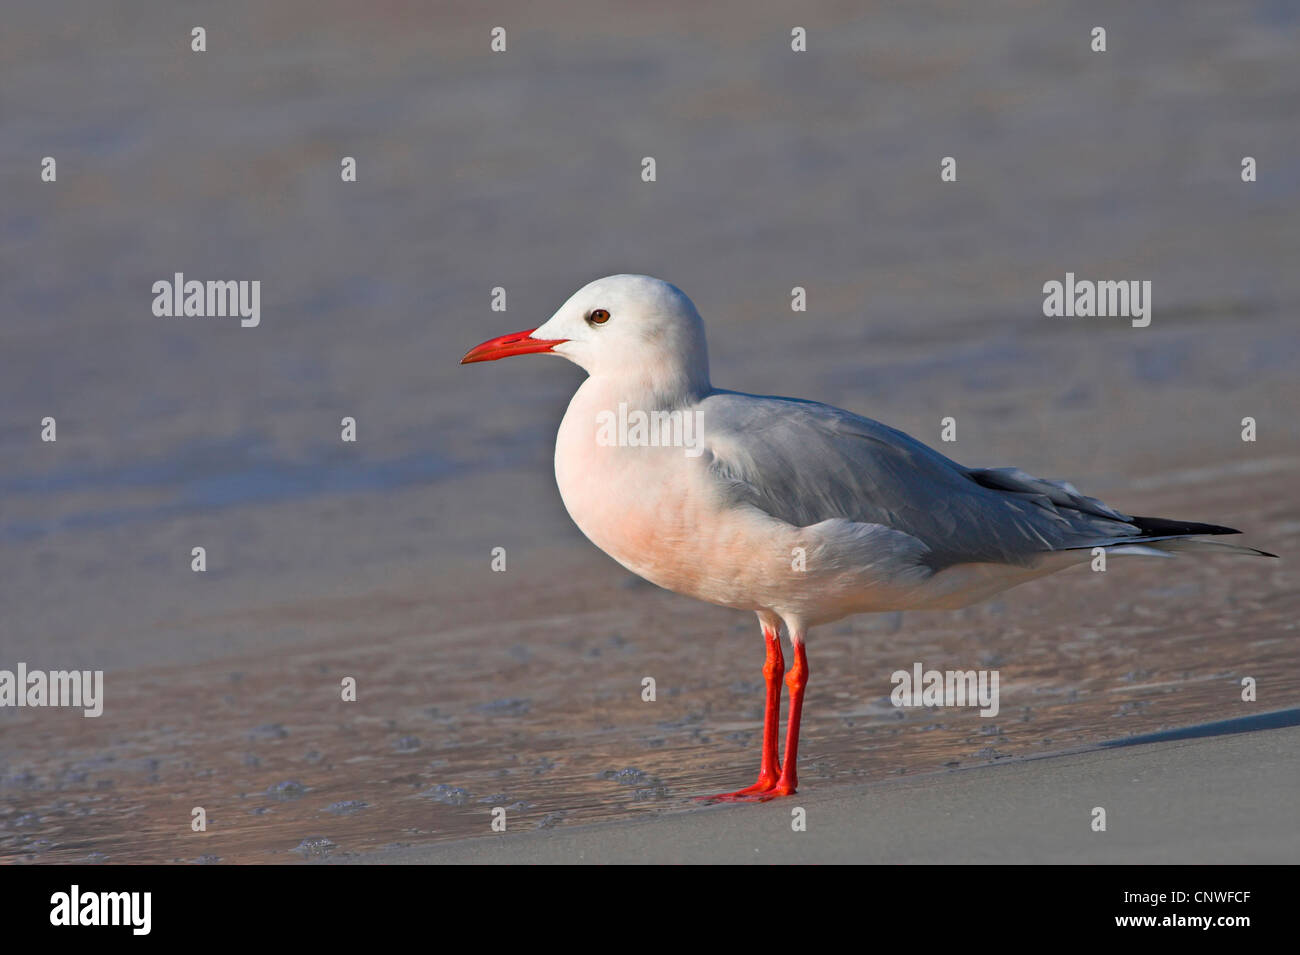 slender-billed gull (Larus genei), standing on the beach, Oman Stock Photo